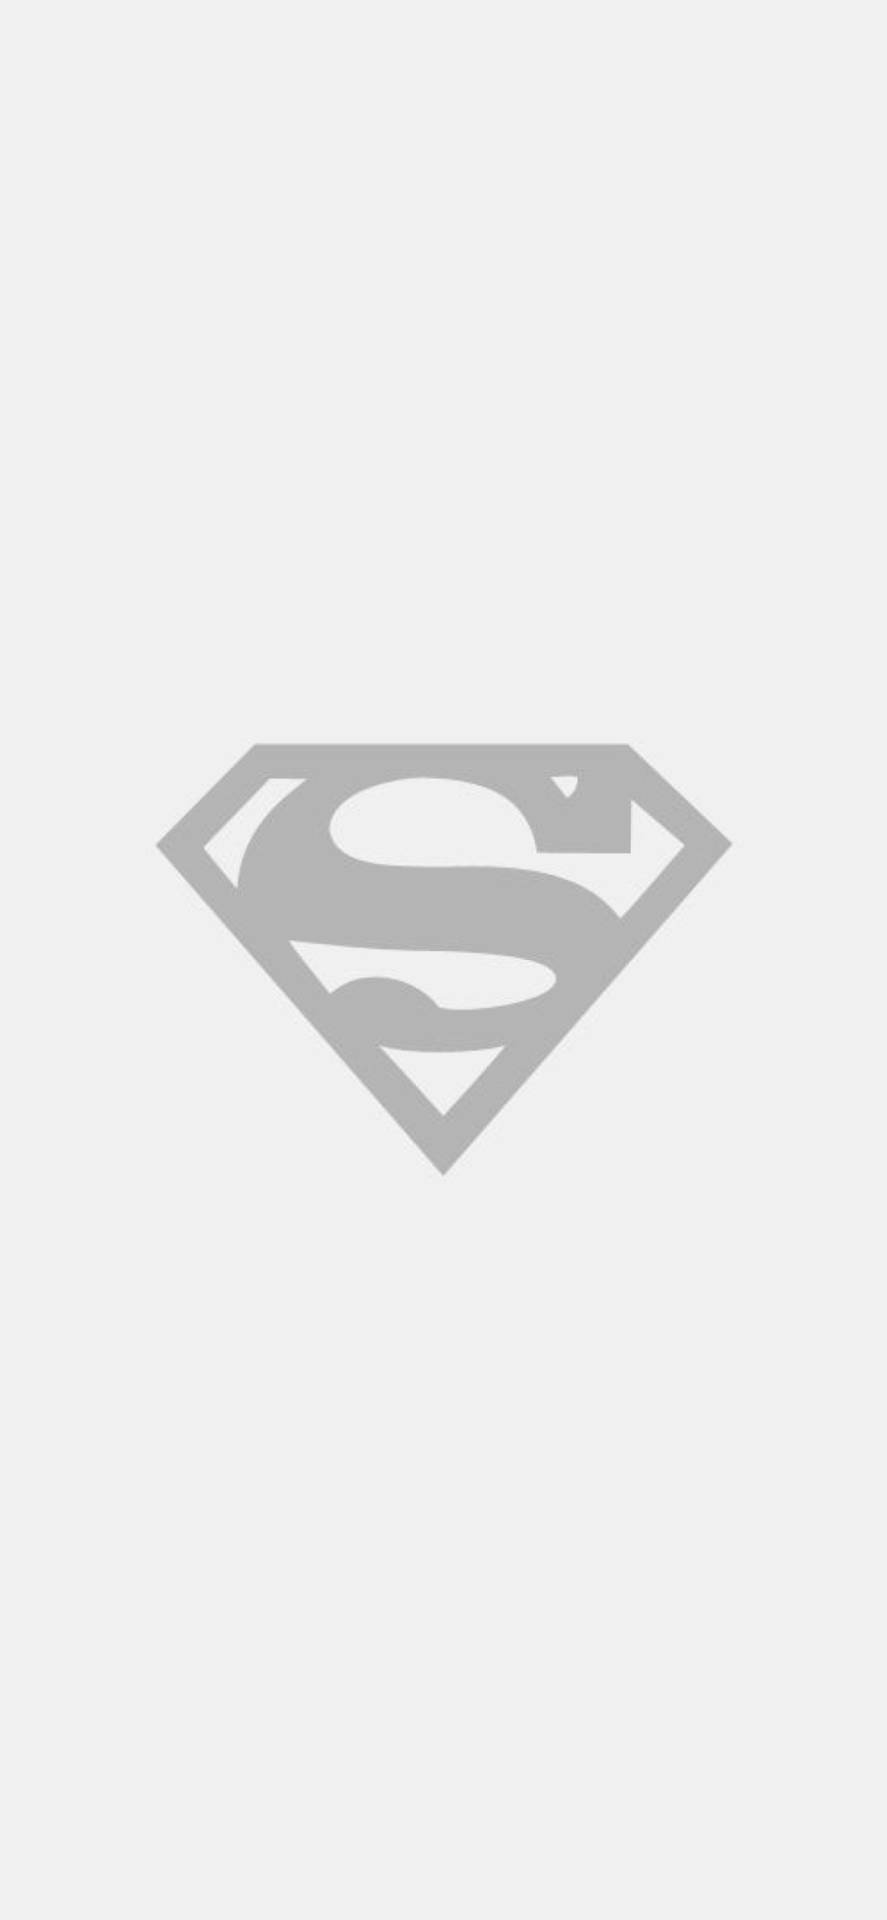 Simple Gray Superman Symbol Iphone Background